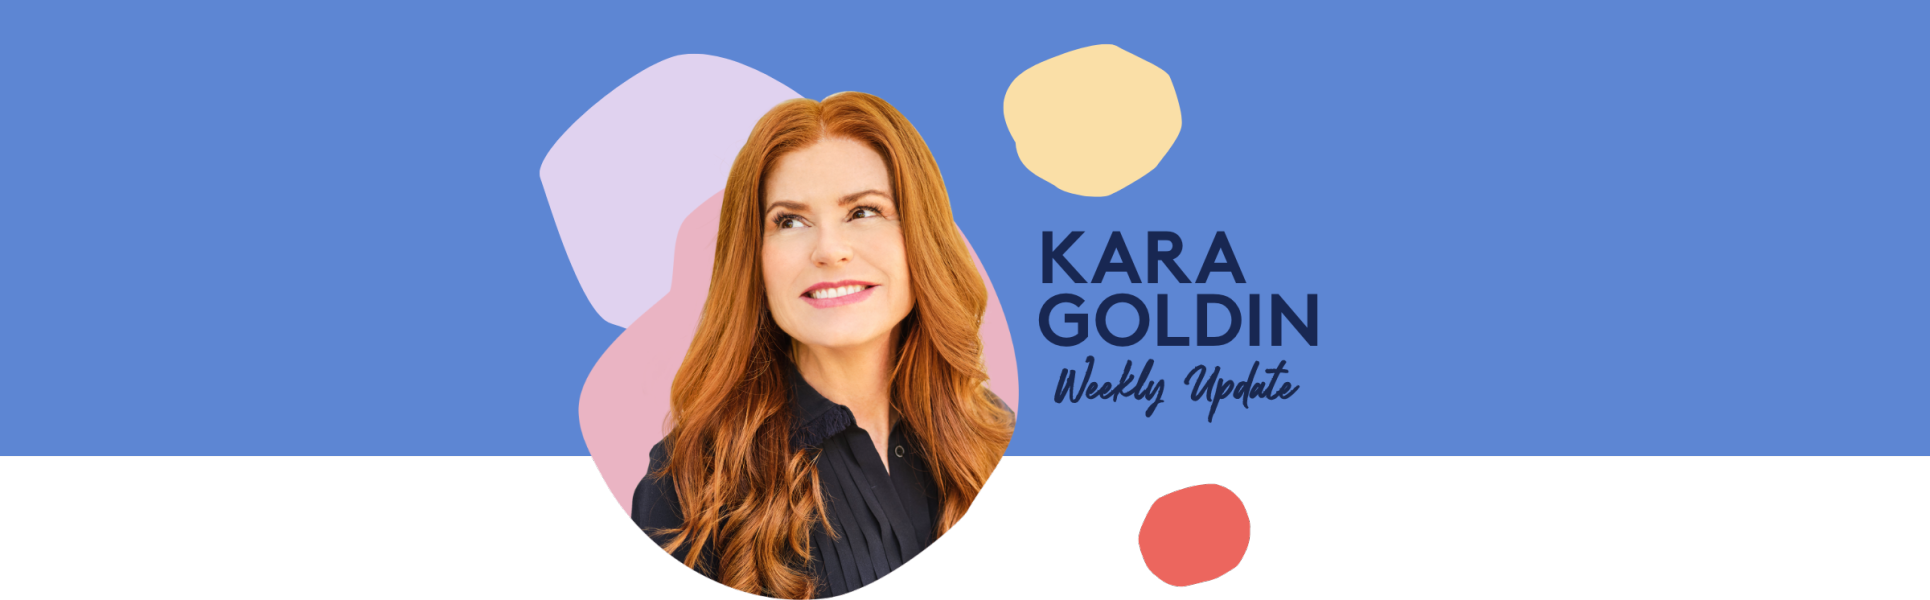 Kara Goldin Weekly Update